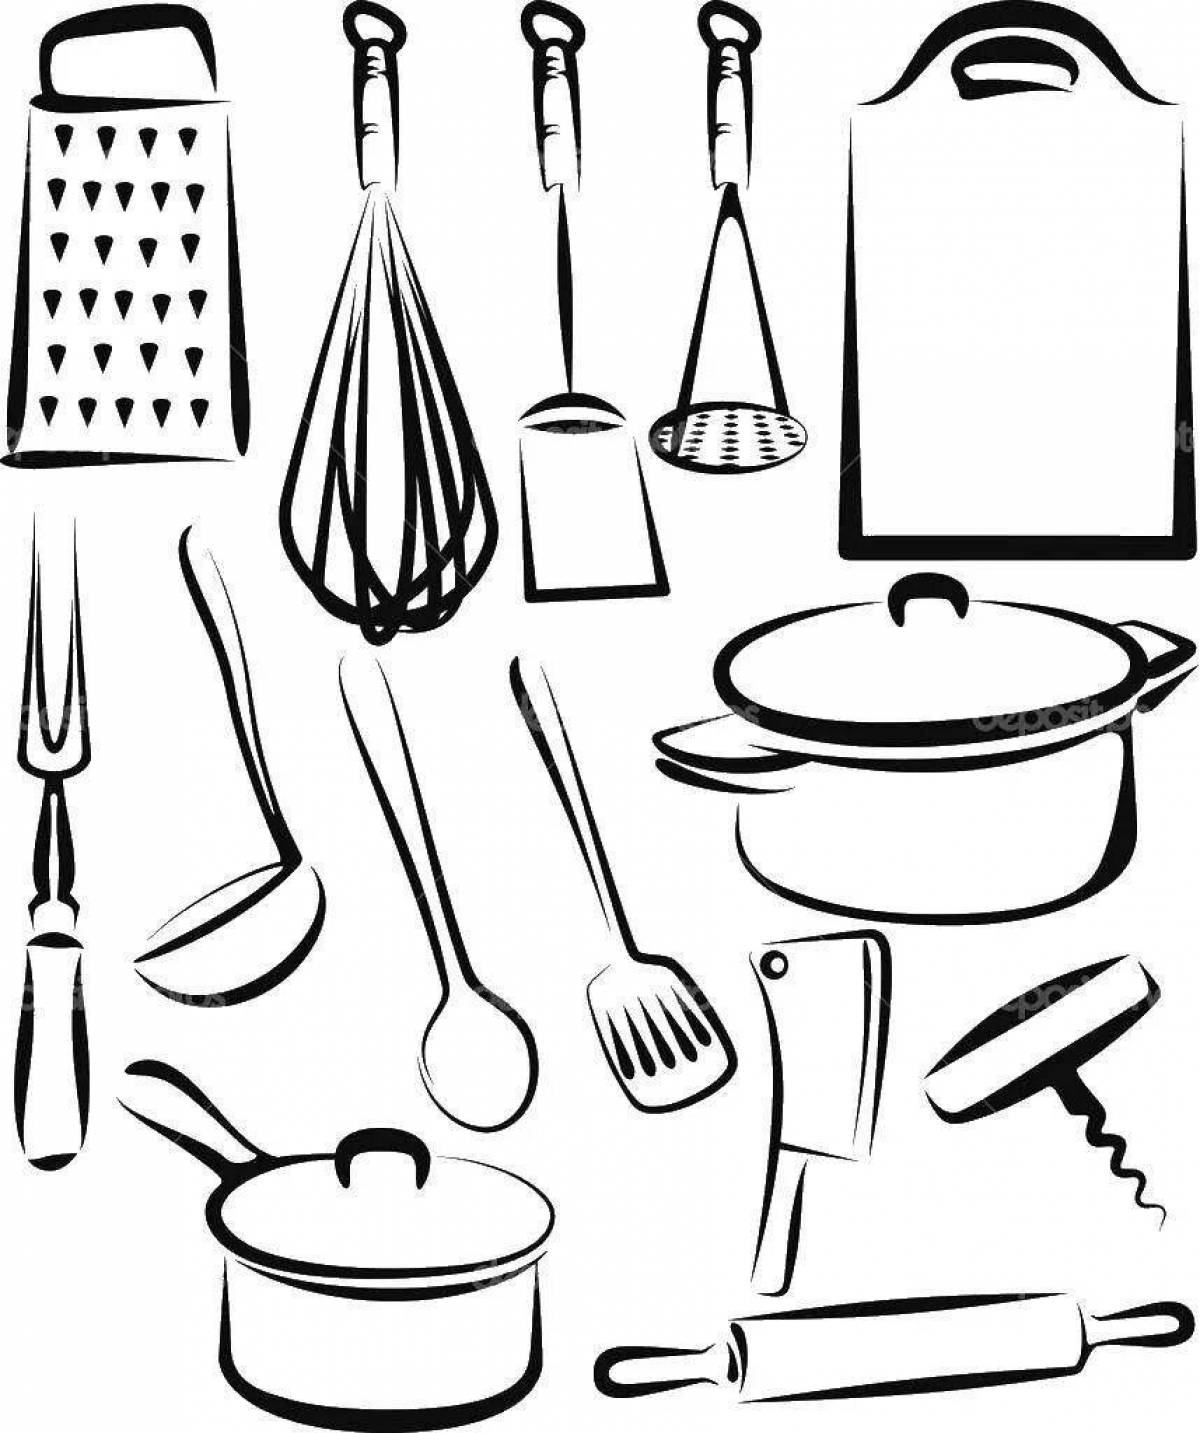 Perfect kitchen utensils coloring book for preschoolers